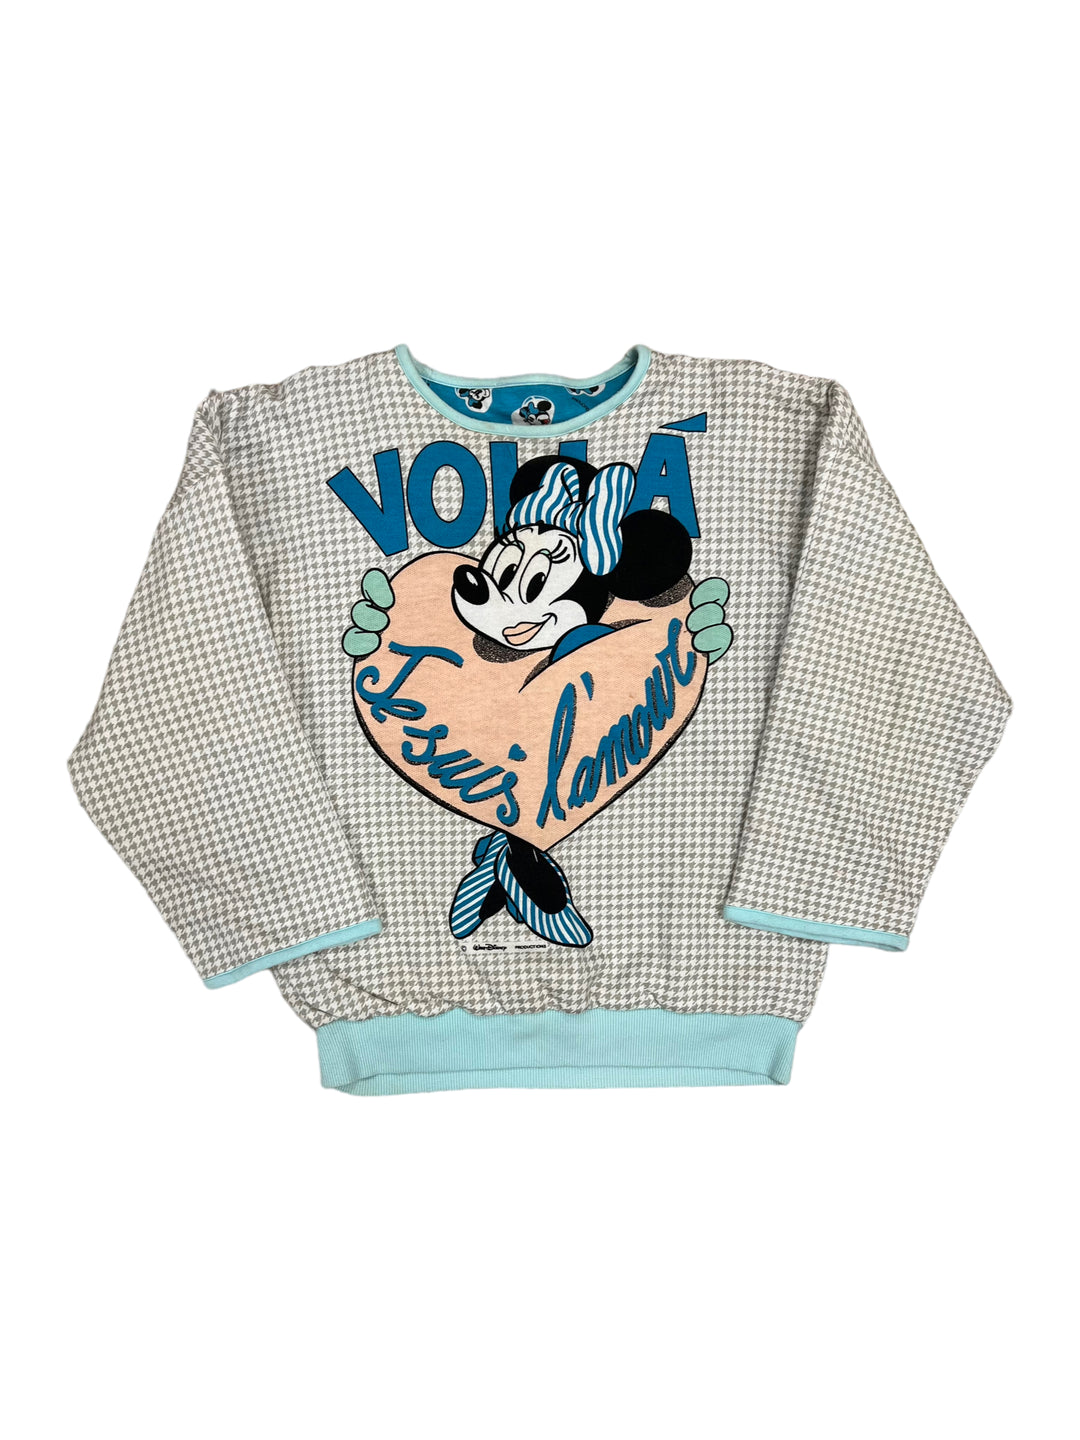 80's Walt Disney Reversible Sweatshirt Women's Large